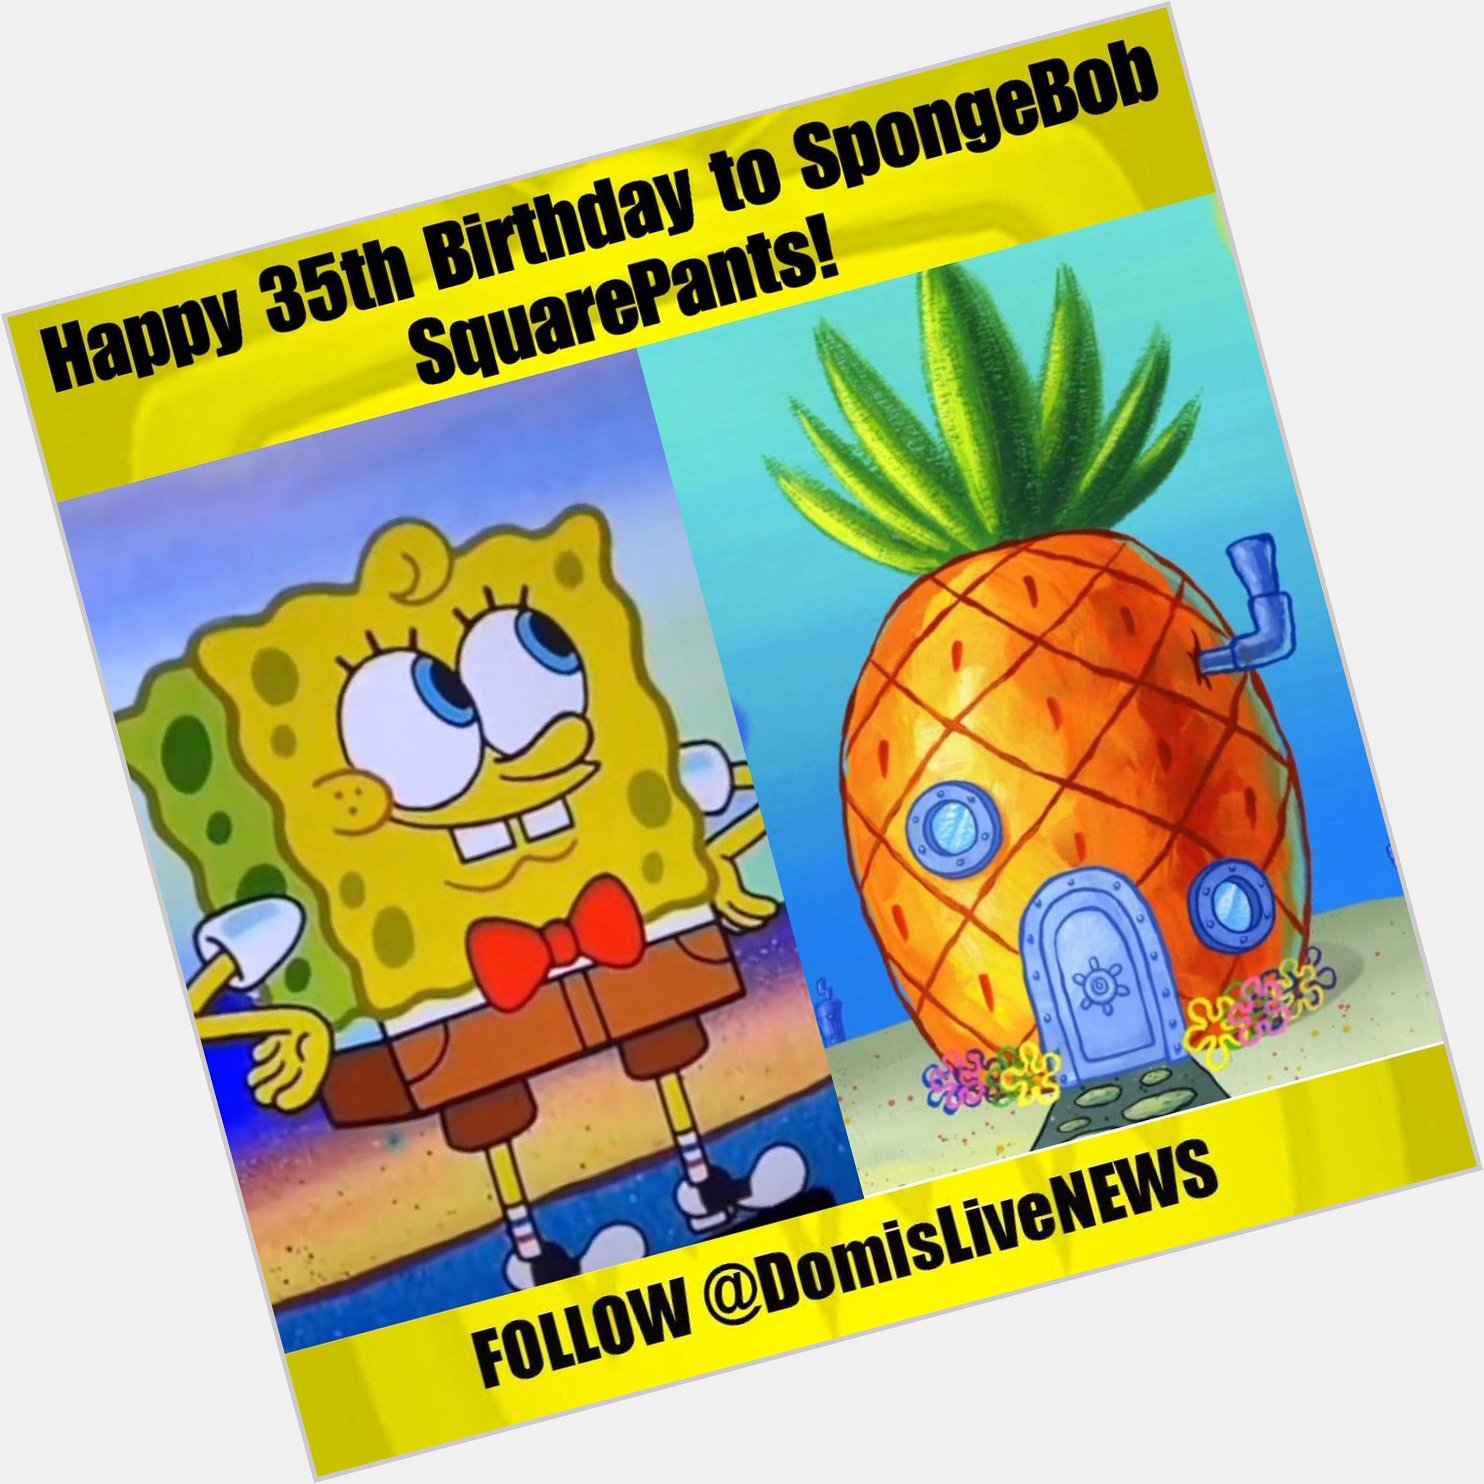 Happy 35th Birthday to SpongeBob SquarePants! 